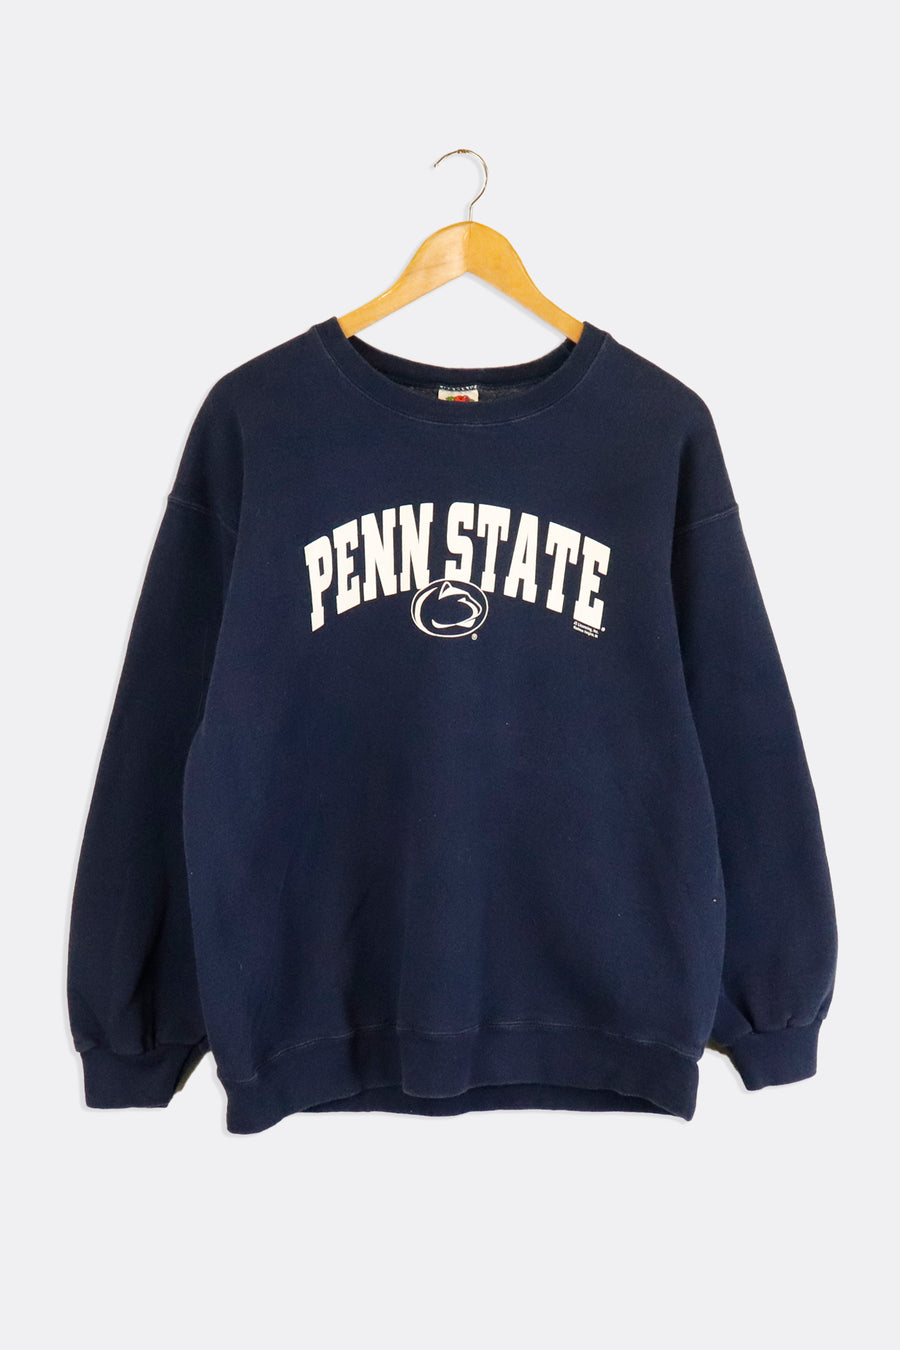 Vintage Penn State All White Block Lettering Font Vinyl Circle Logo Sweatshirt Sz L